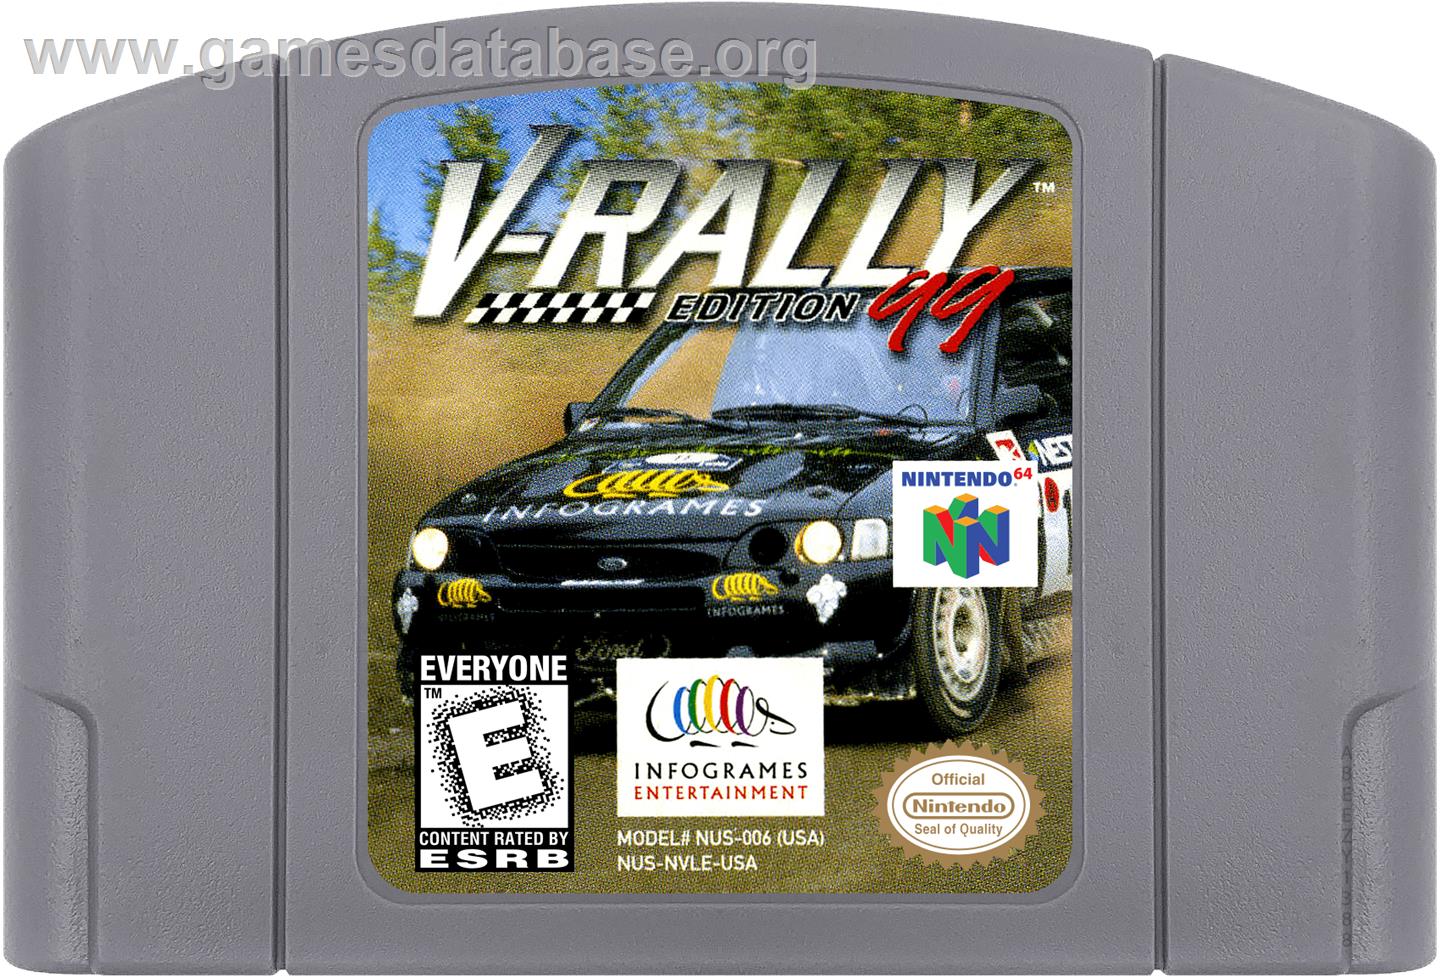 V-Rally Edition 99 - Nintendo N64 - Artwork - Cartridge